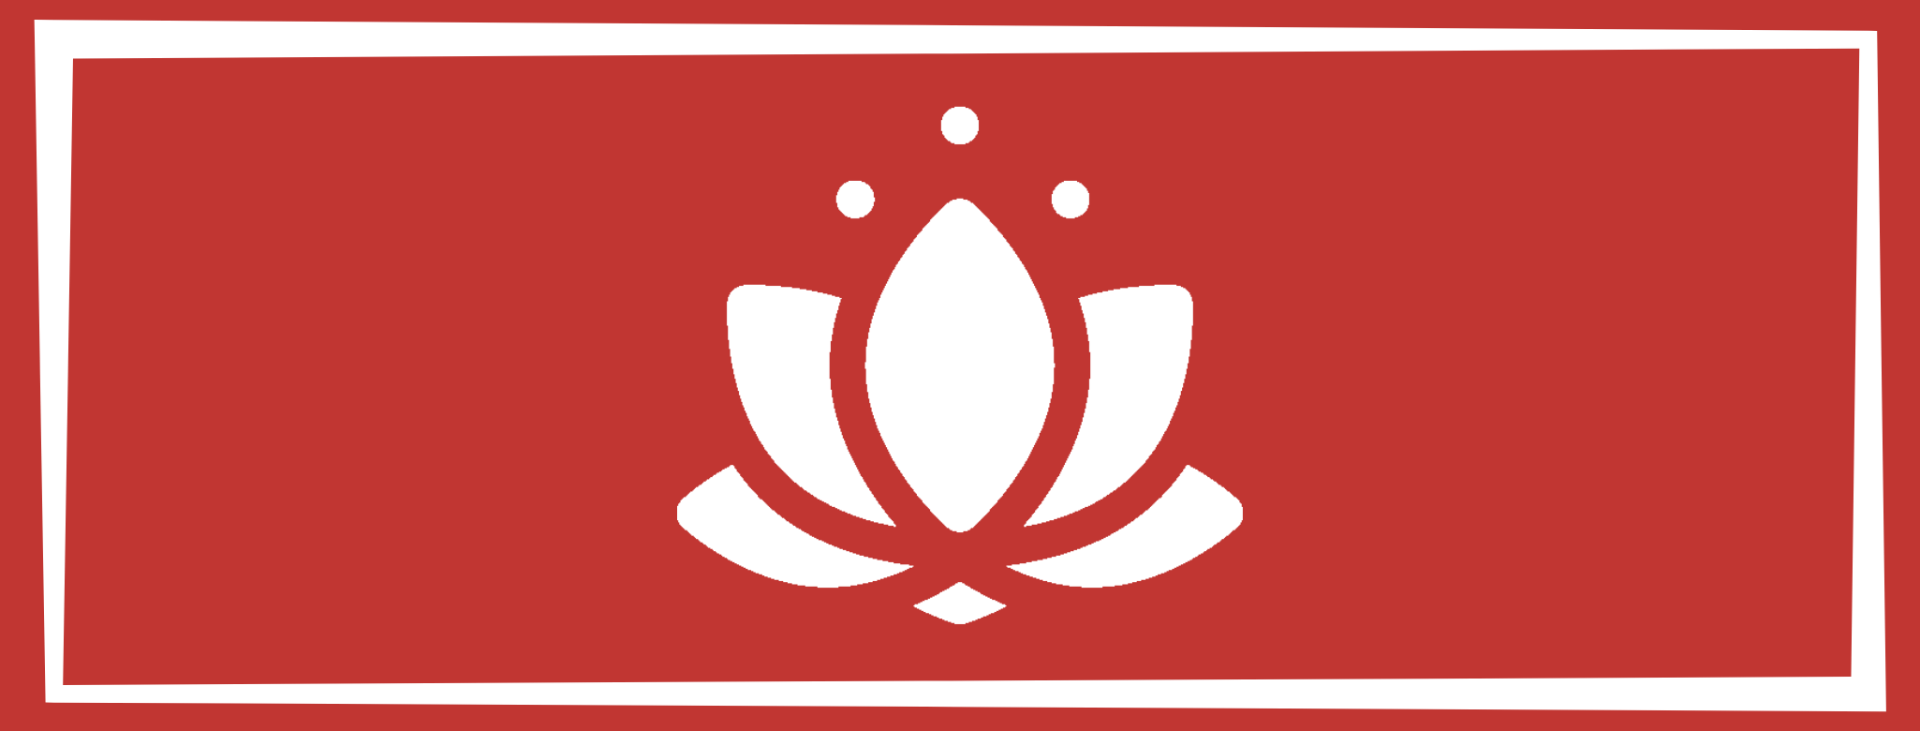 spiritual wellness solid square with lotus blossom